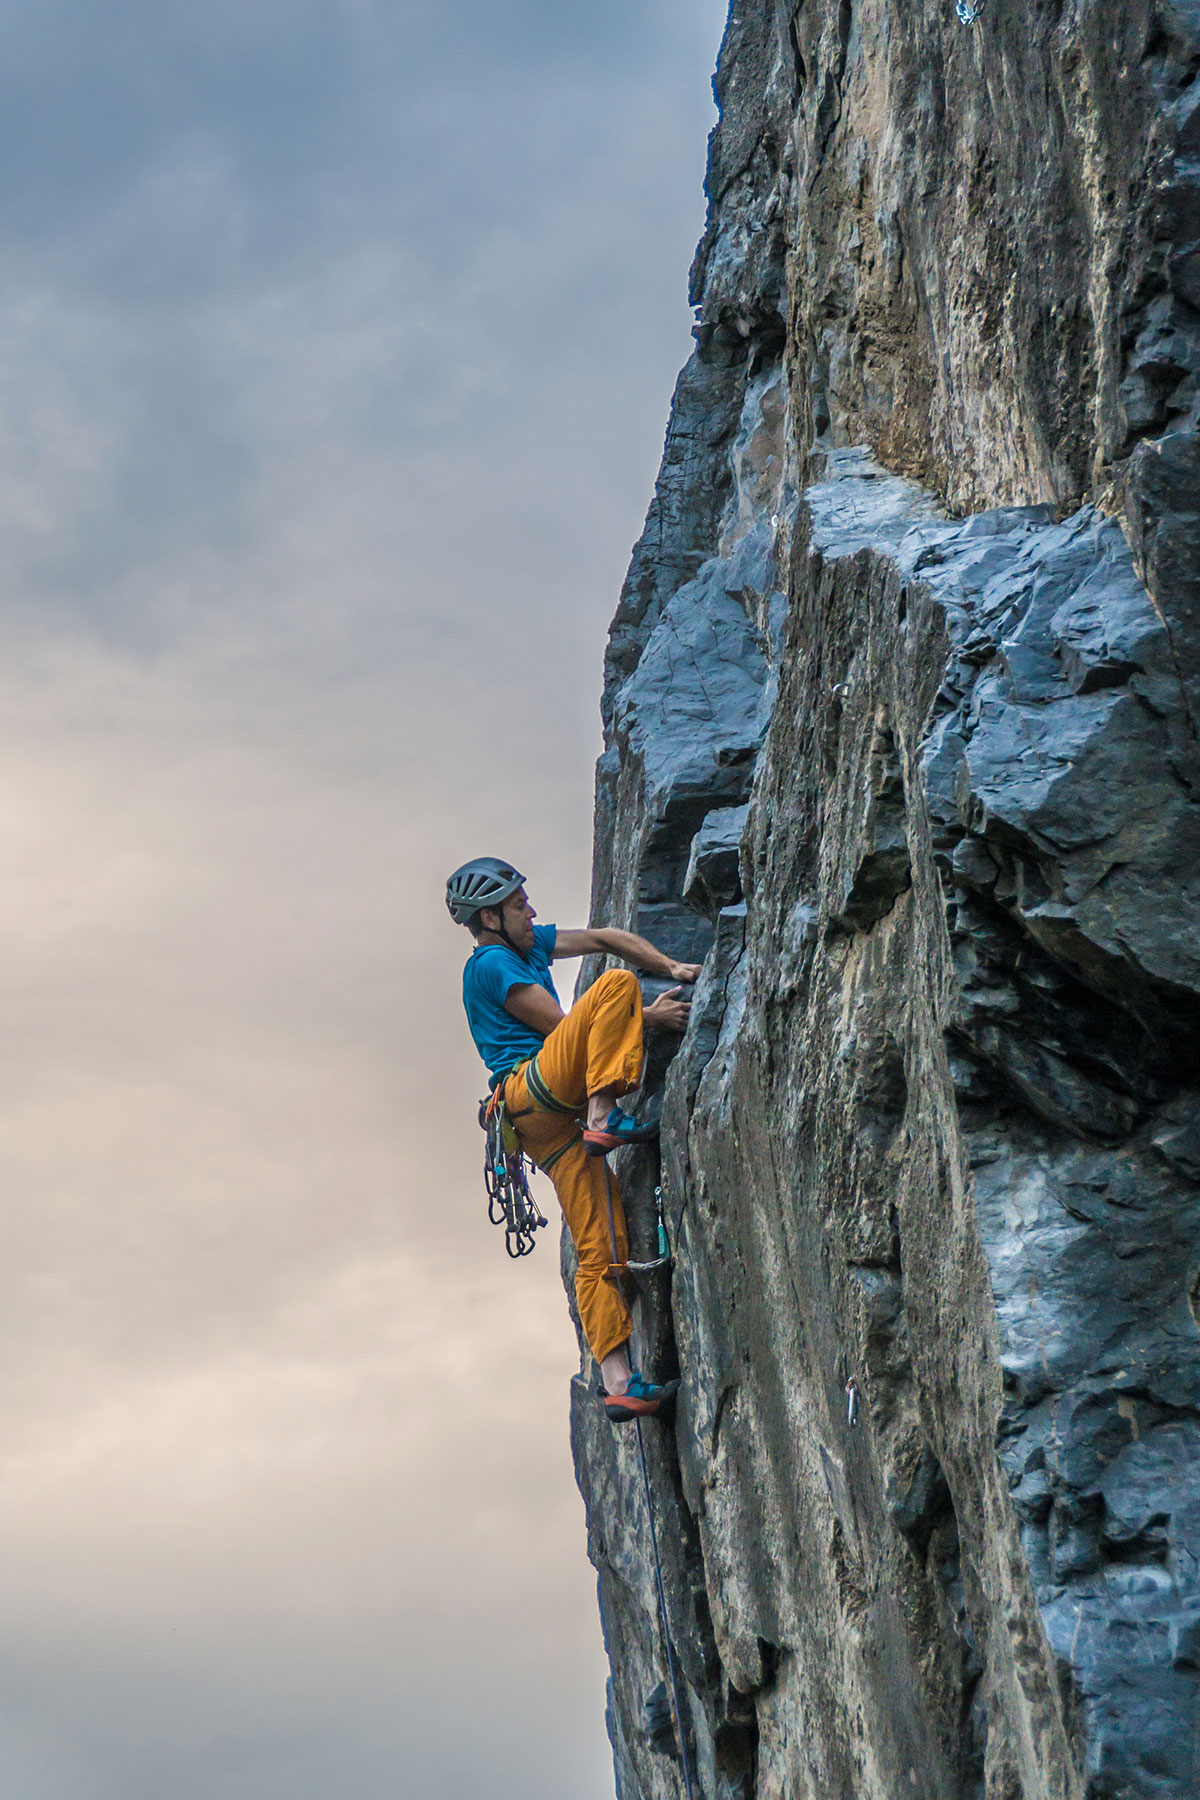 Warstein, Hillenberg, Route „Sichelriss clean“, 9-, Climber Mathias Weck, Photographer: Thihamy Nguyen